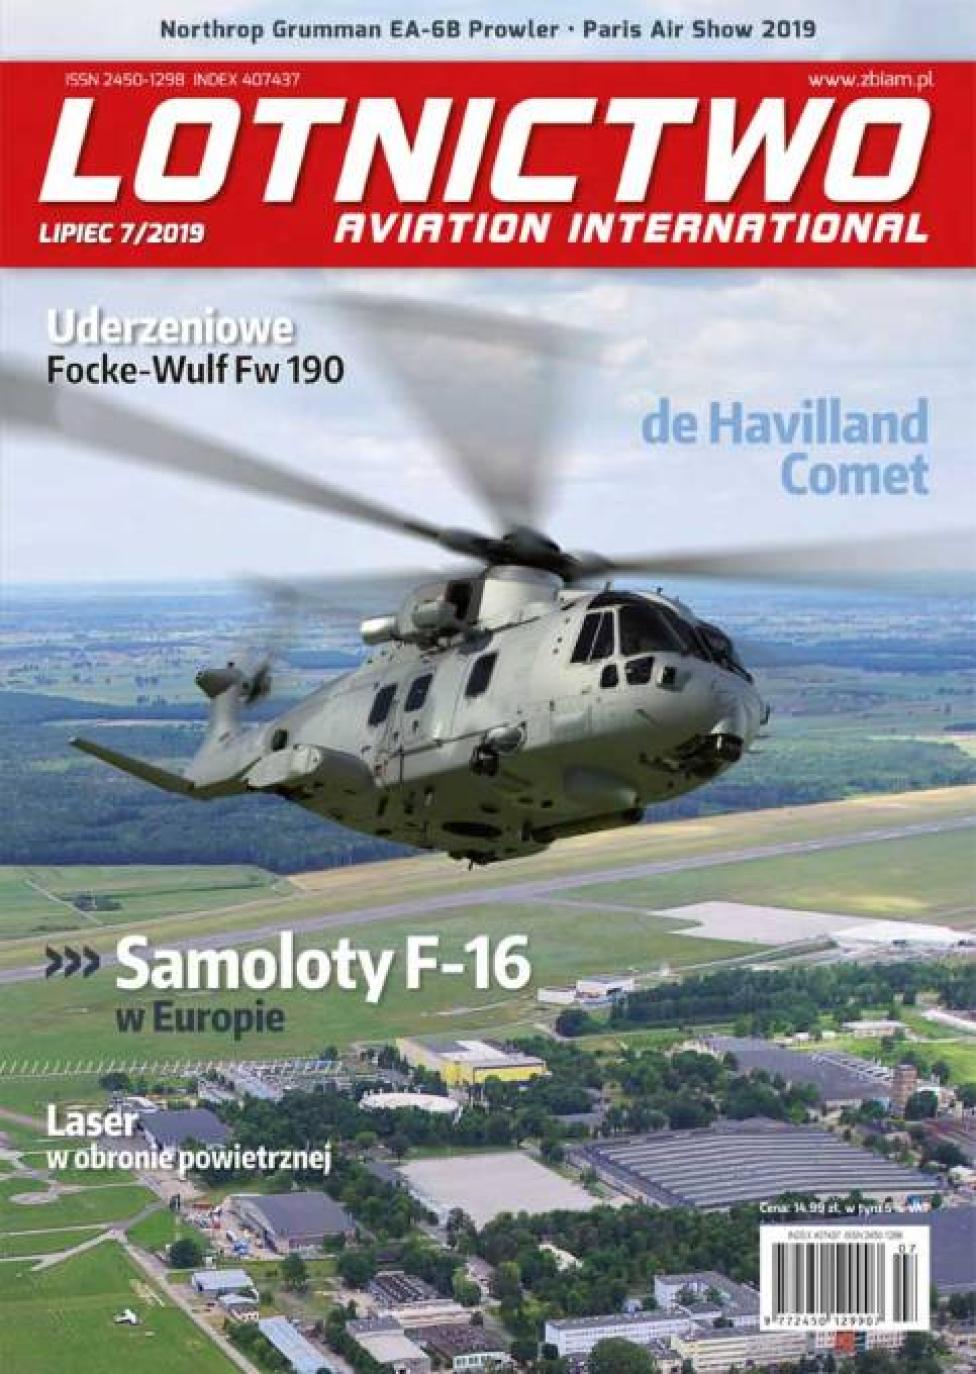 Lotnictwo Aviation International 7/2019